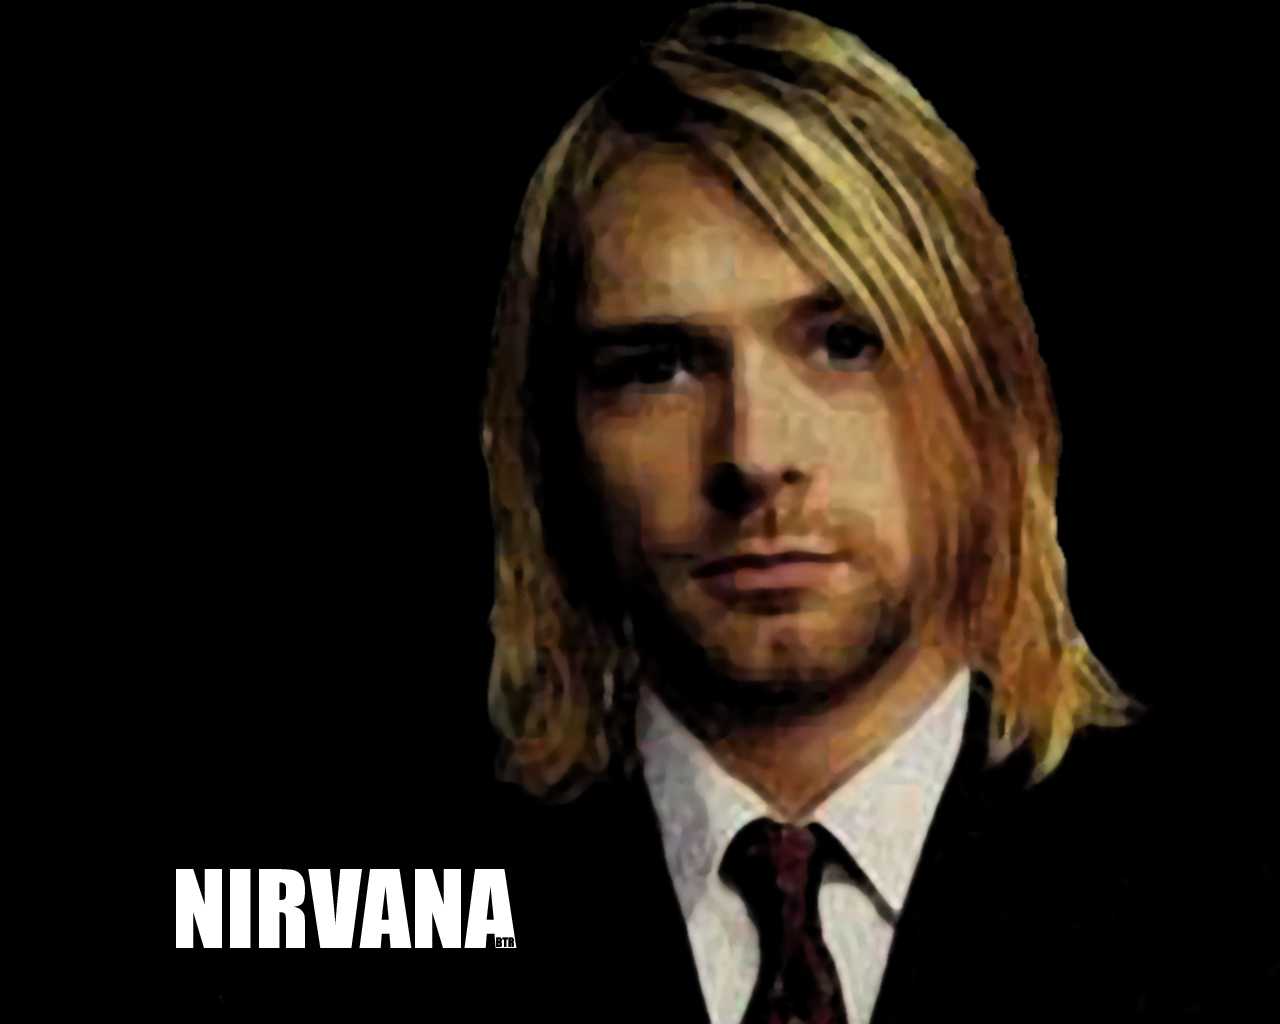 Kurt Cobain Pics Image HD Wallpaper 1280x1024PX Wallpaper